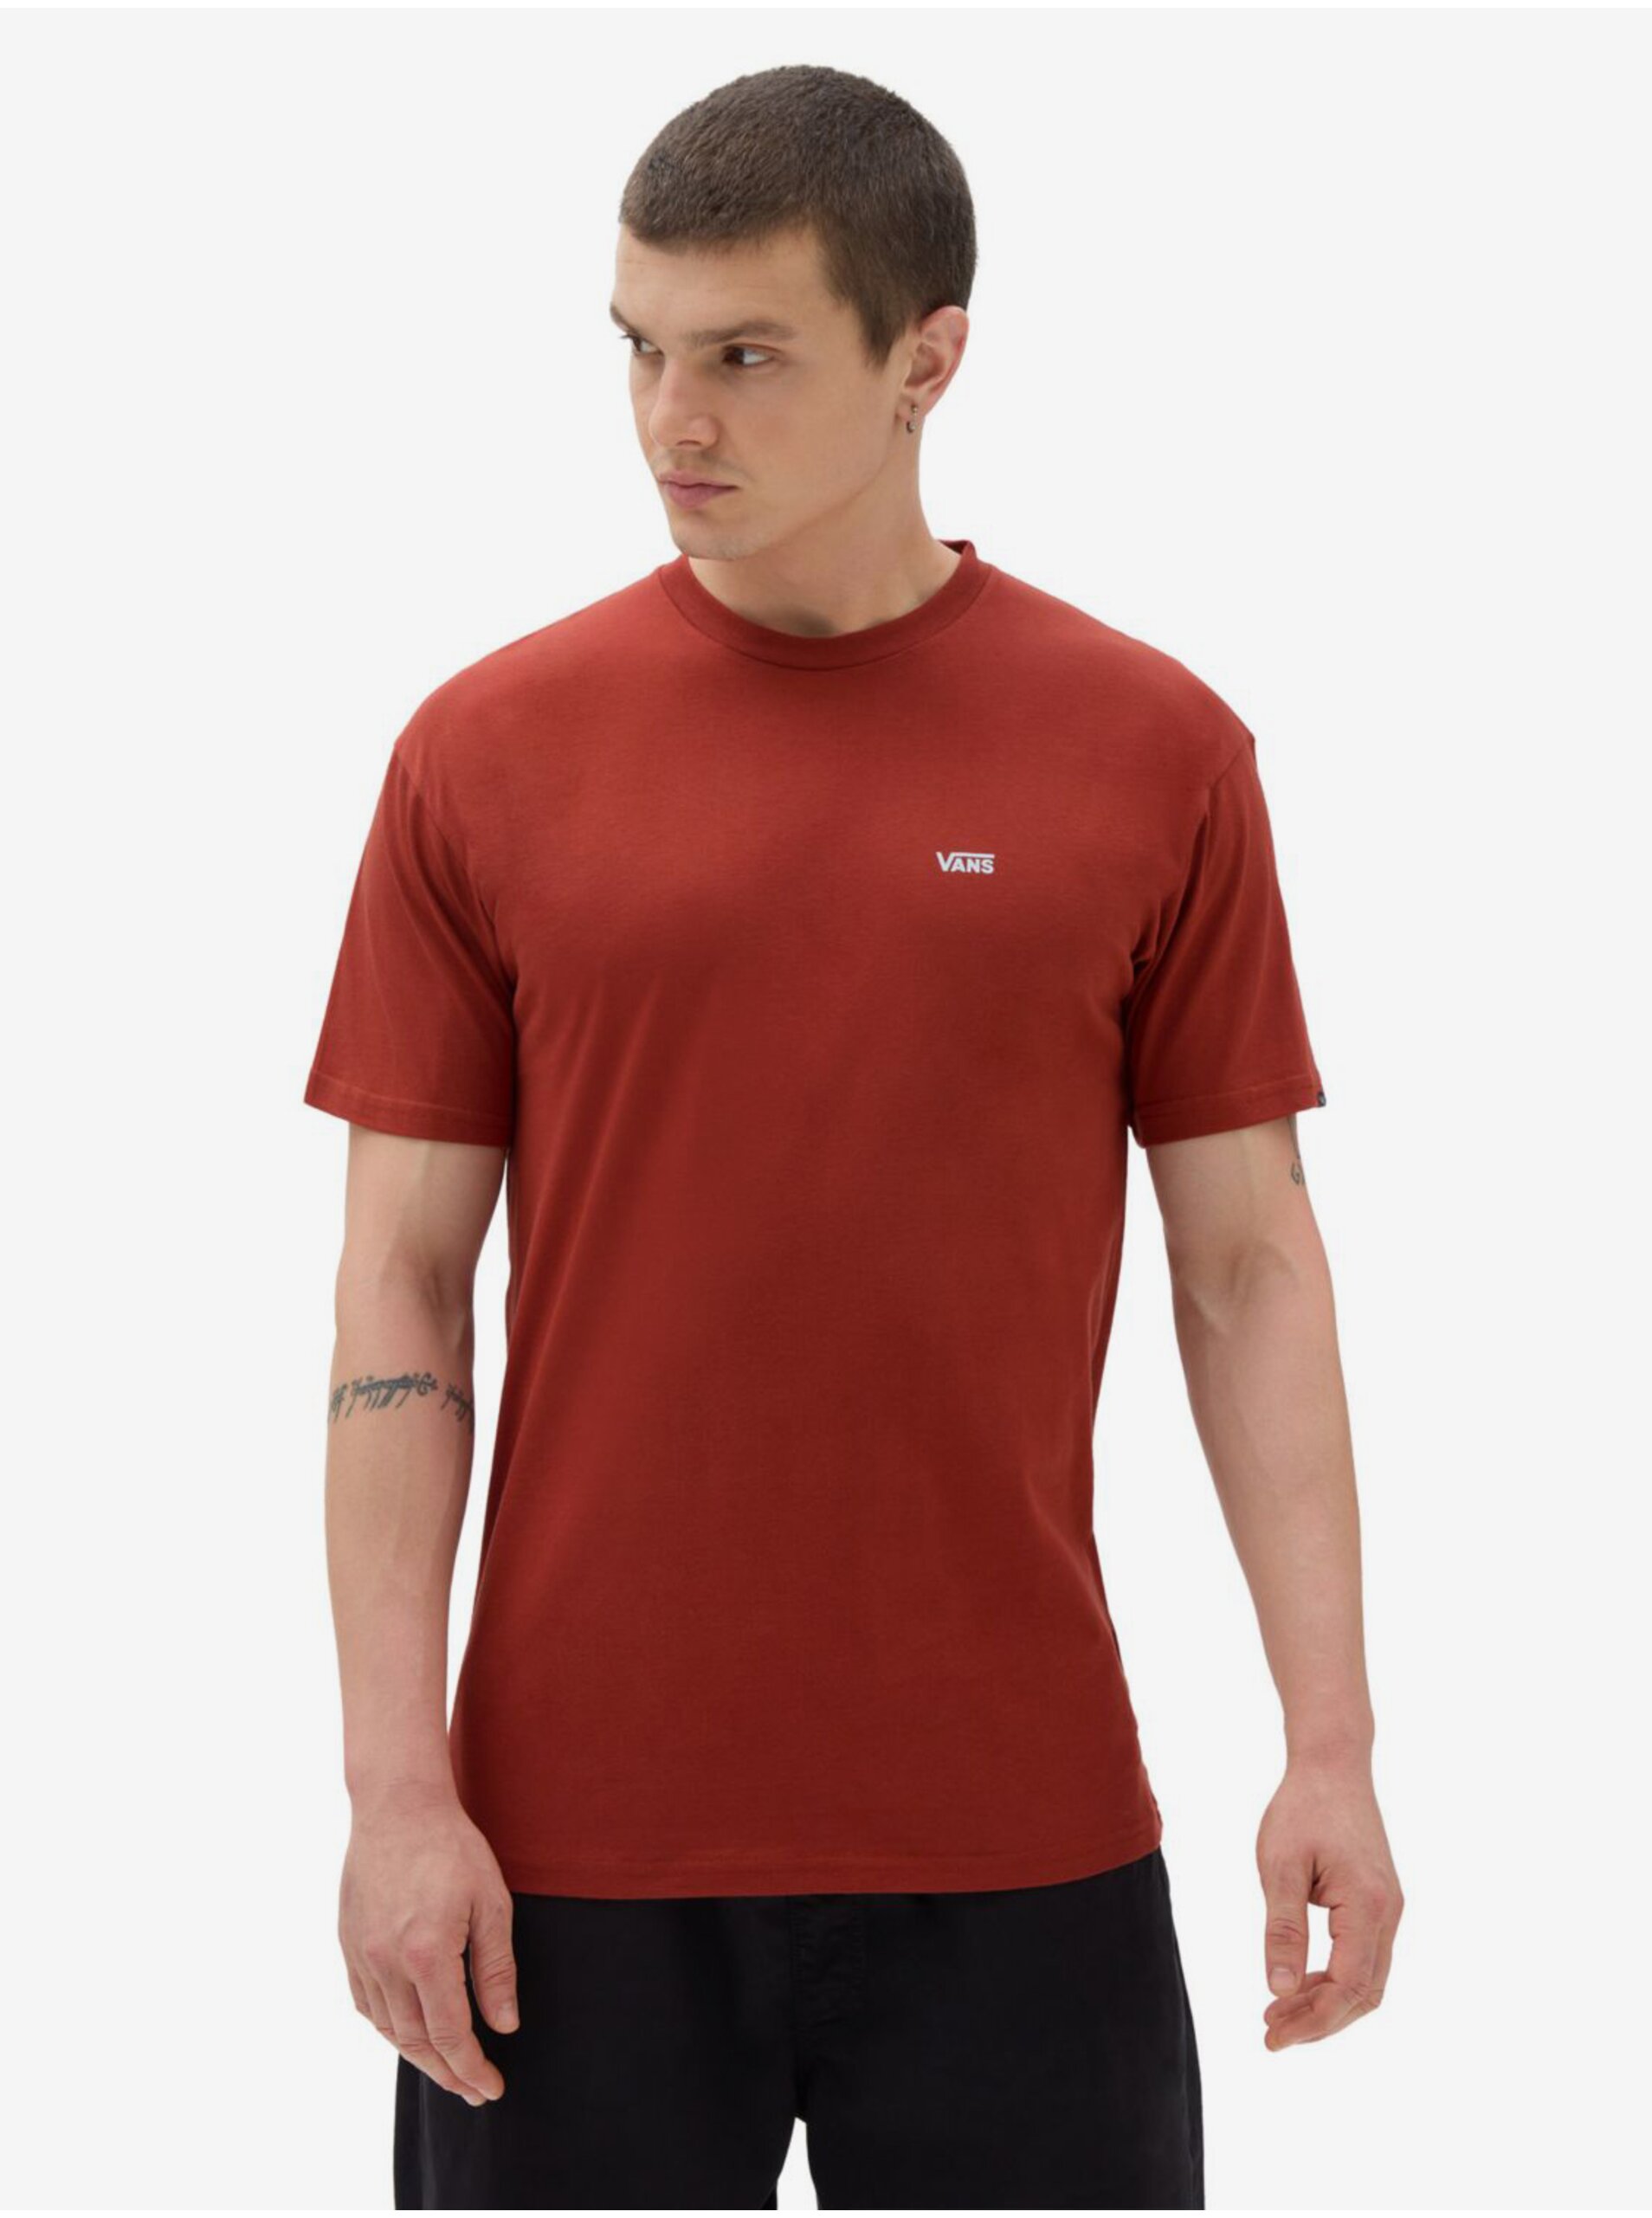 E-shop Cihlové pánské tričko VANS